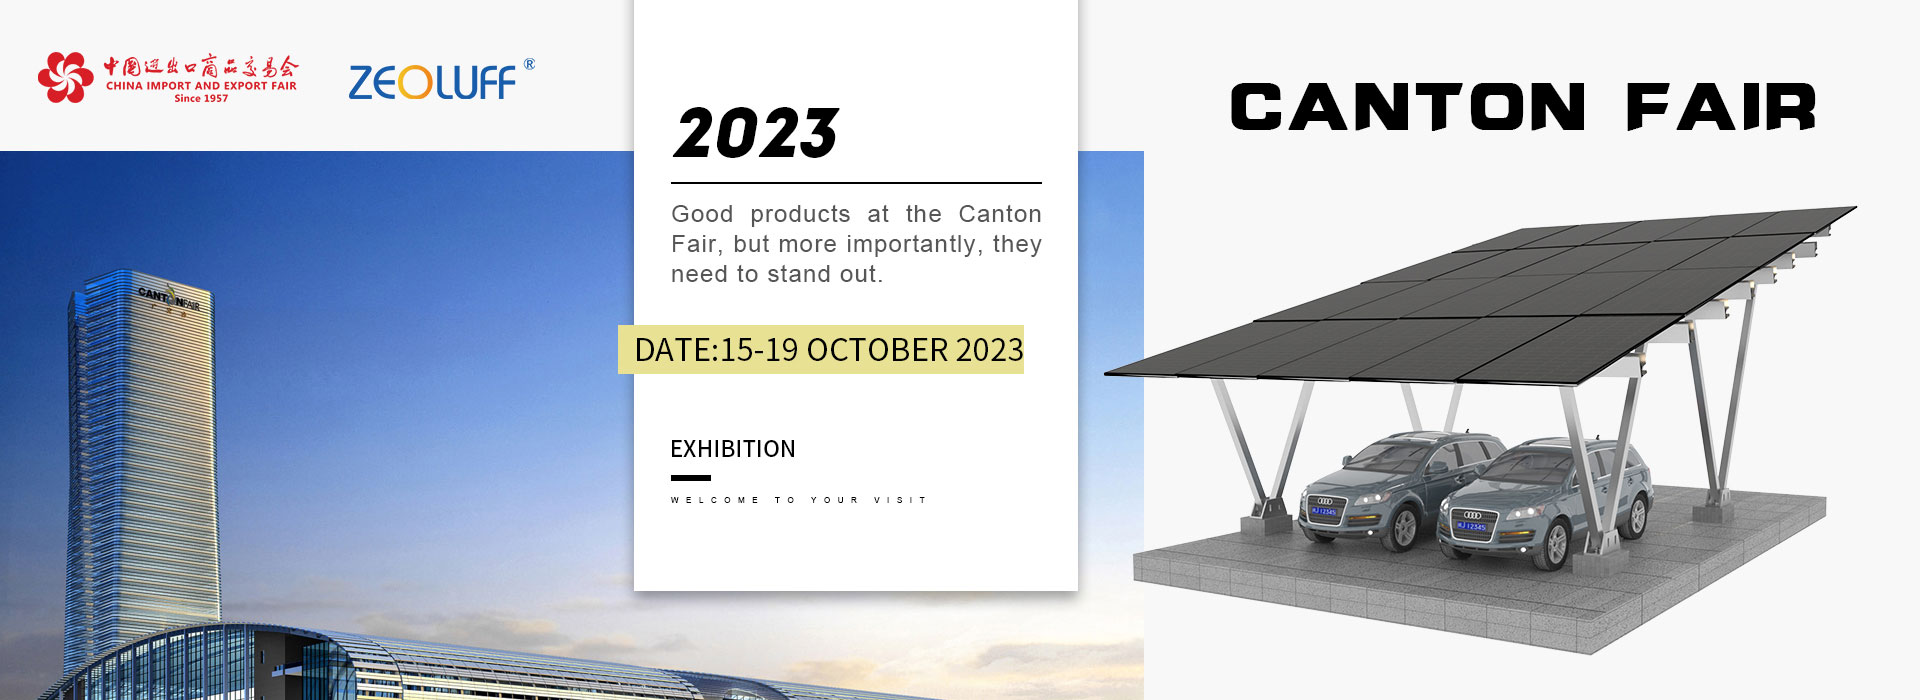 Zeoluff Photovoltaic Exhibition at the Canton Fair_1920x700